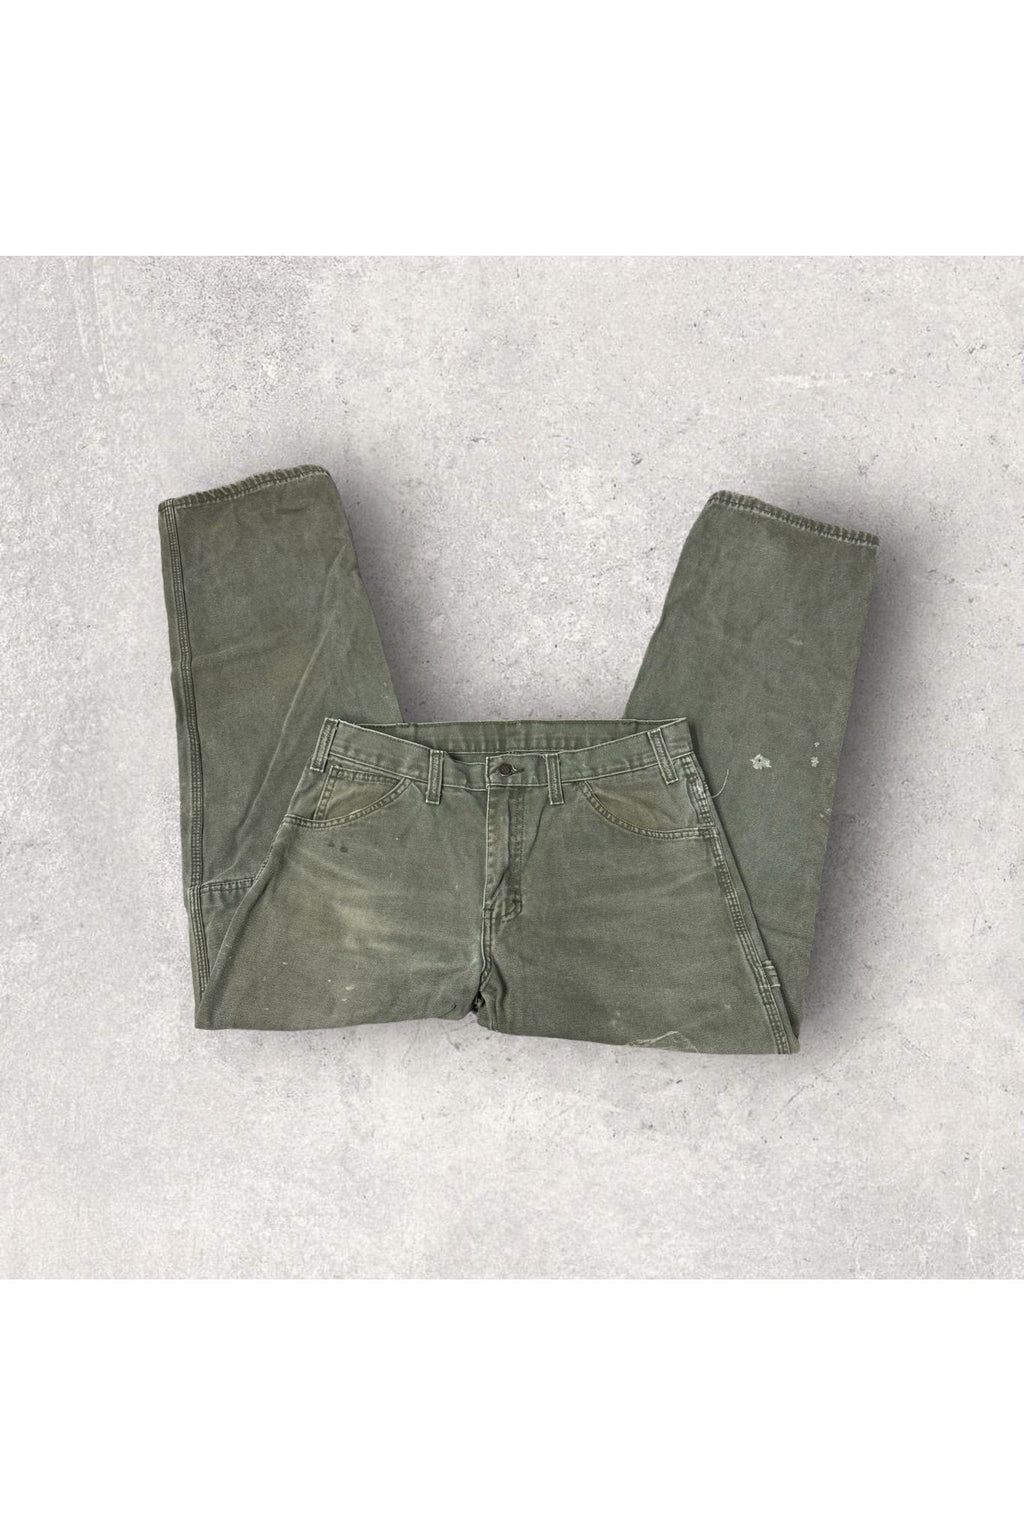 Dickie's Carpenter Workwear Pants- 32 x 32